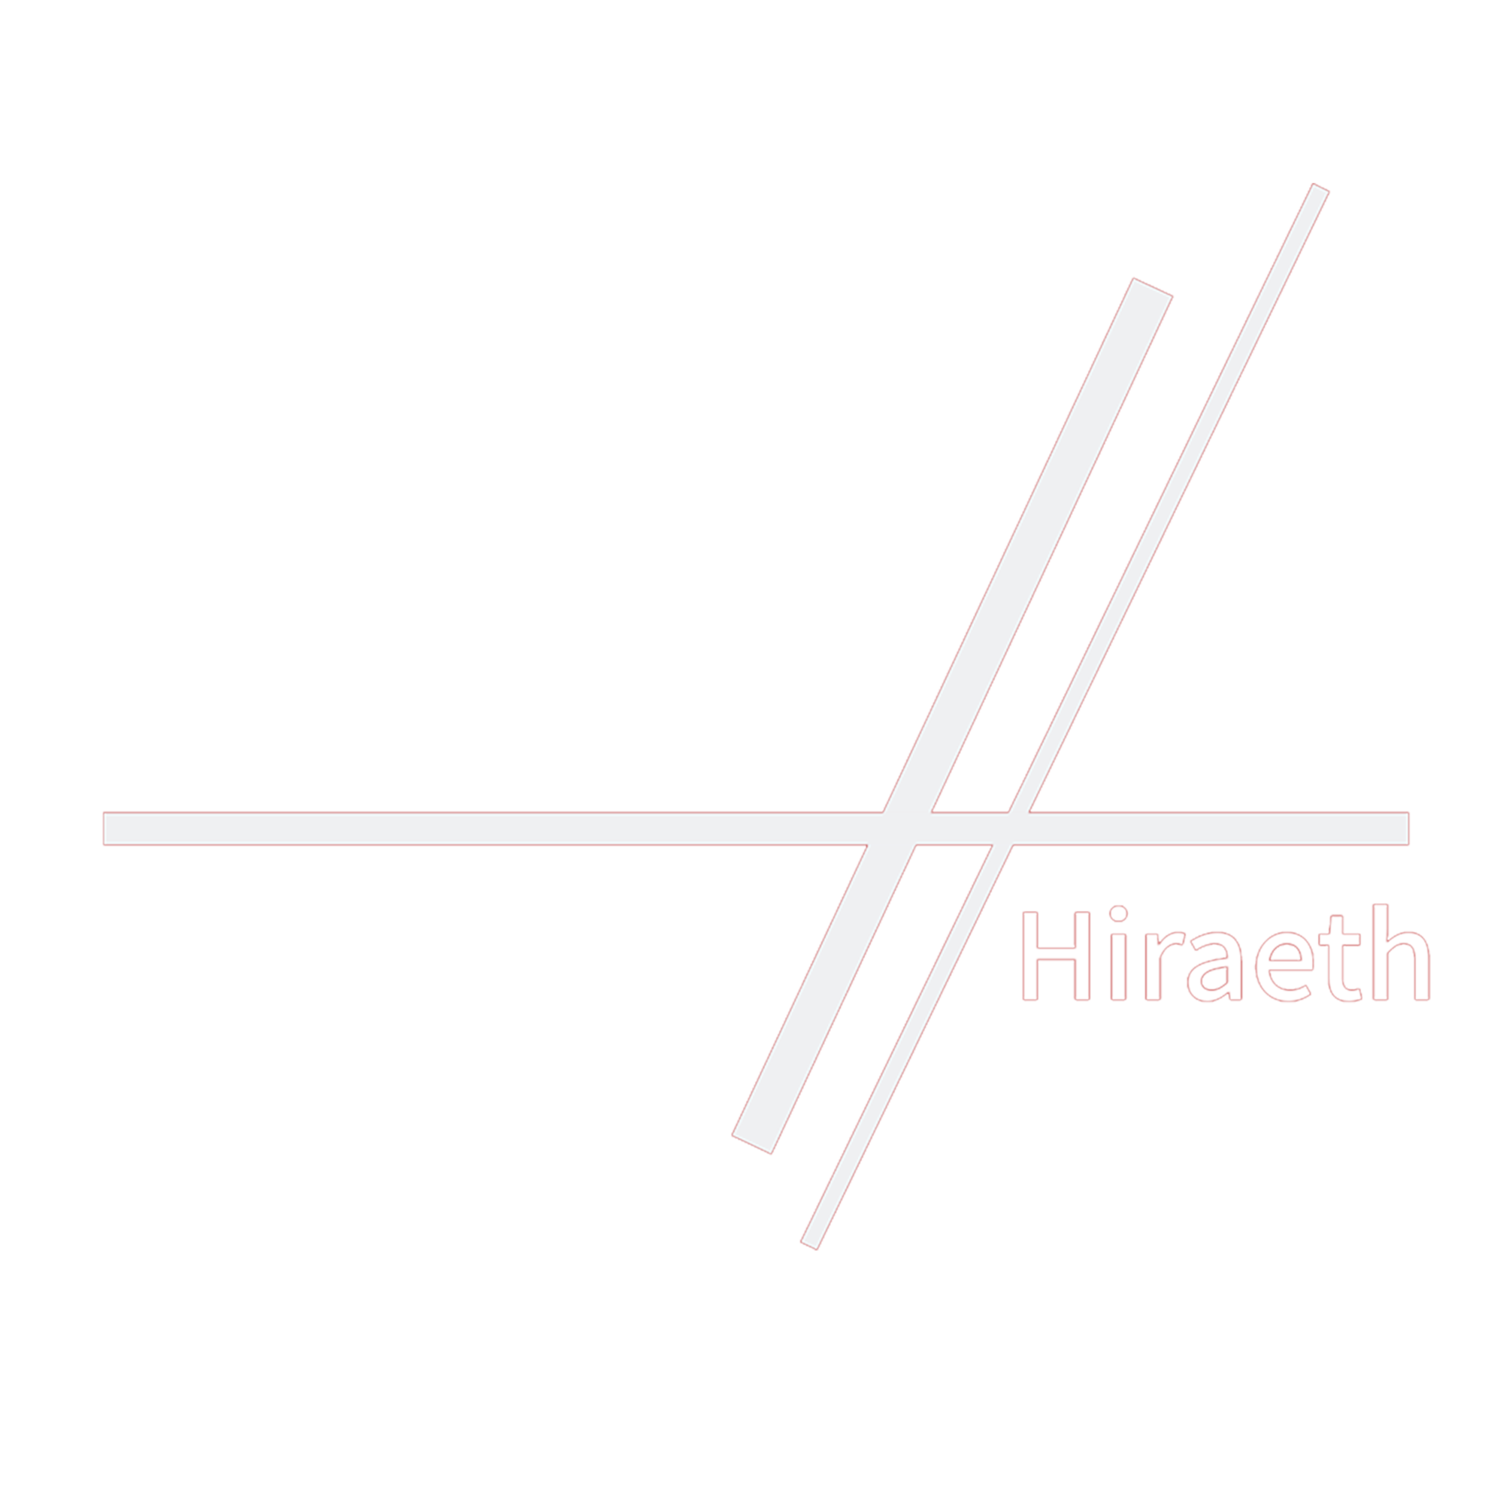 Hiraeth - Welsh Politics